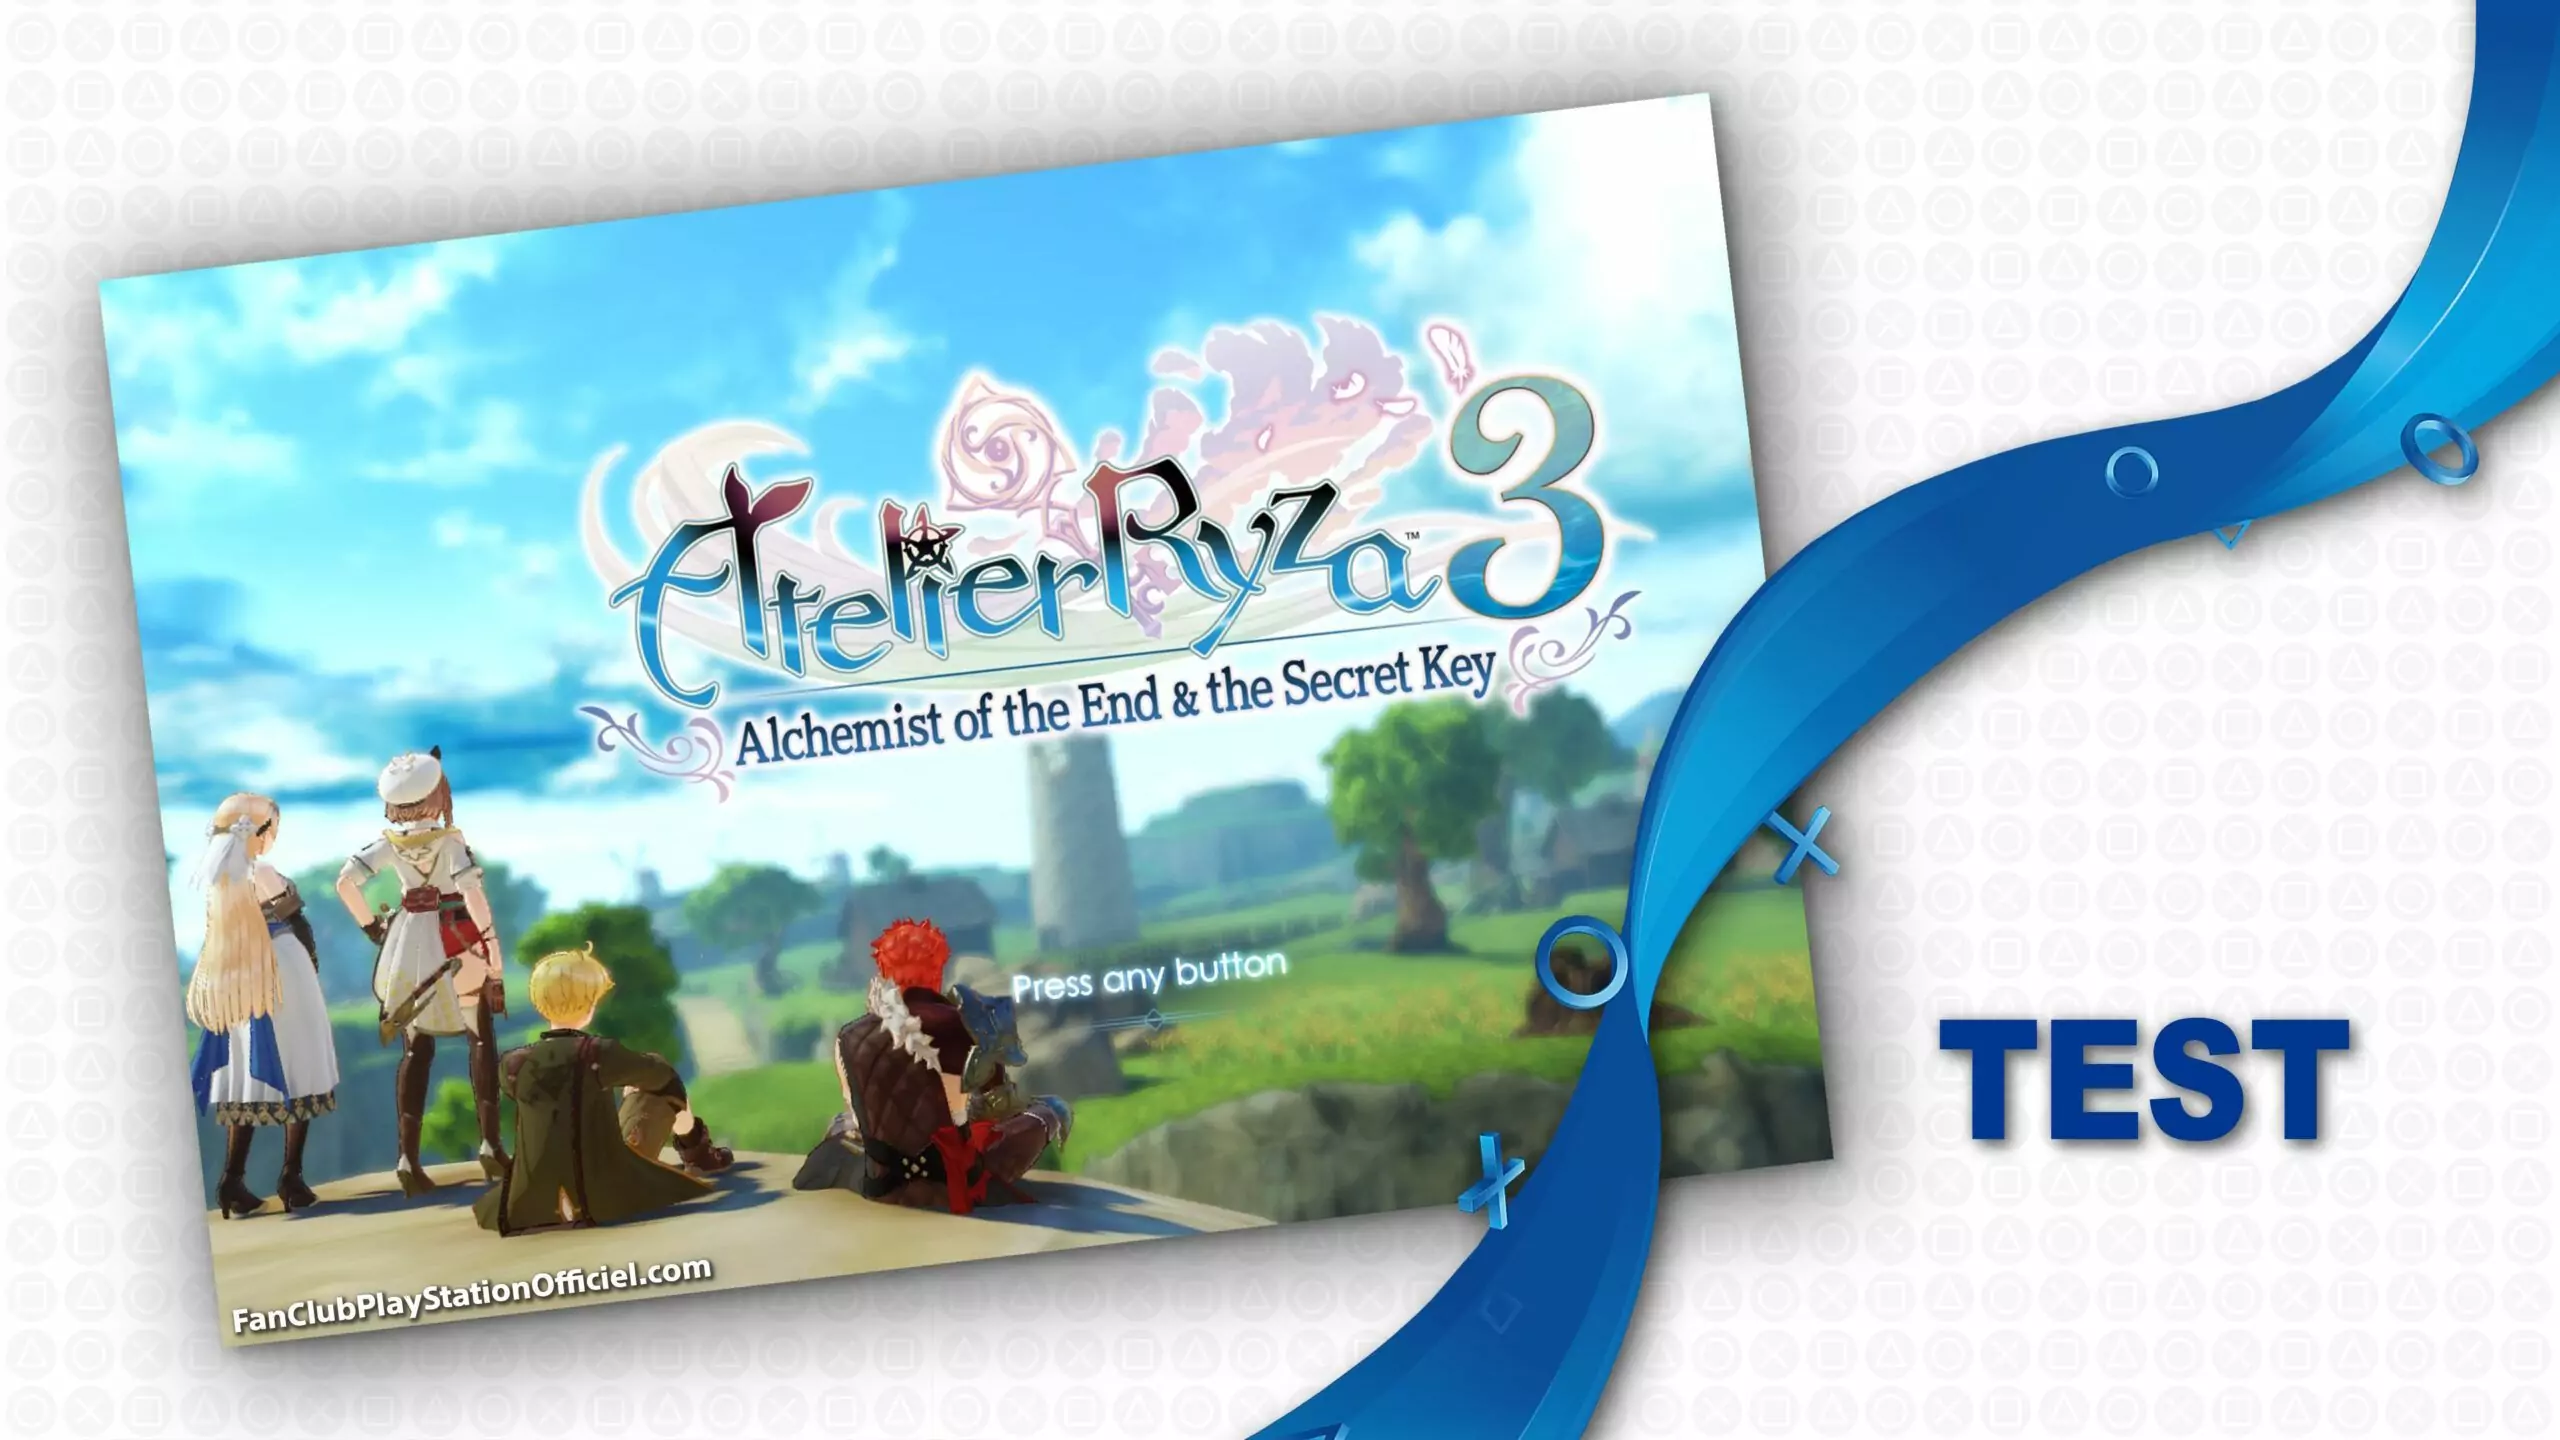 [ TEST ]  Atelier Ryza 3 – Alchemist of the End & the Secret Key